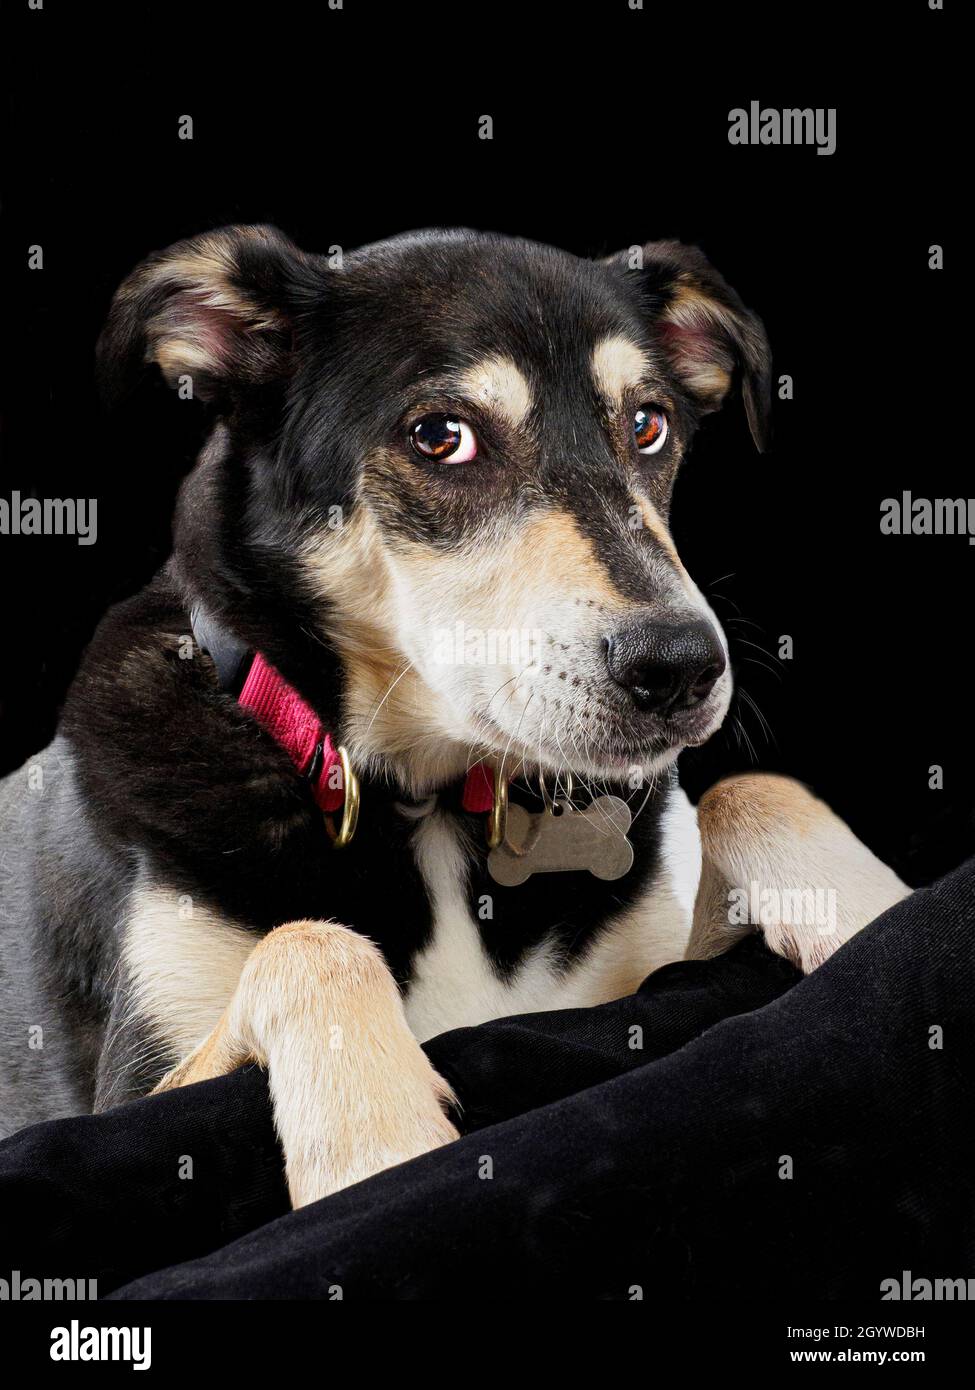 Suspicious looking dog. Stock Photo